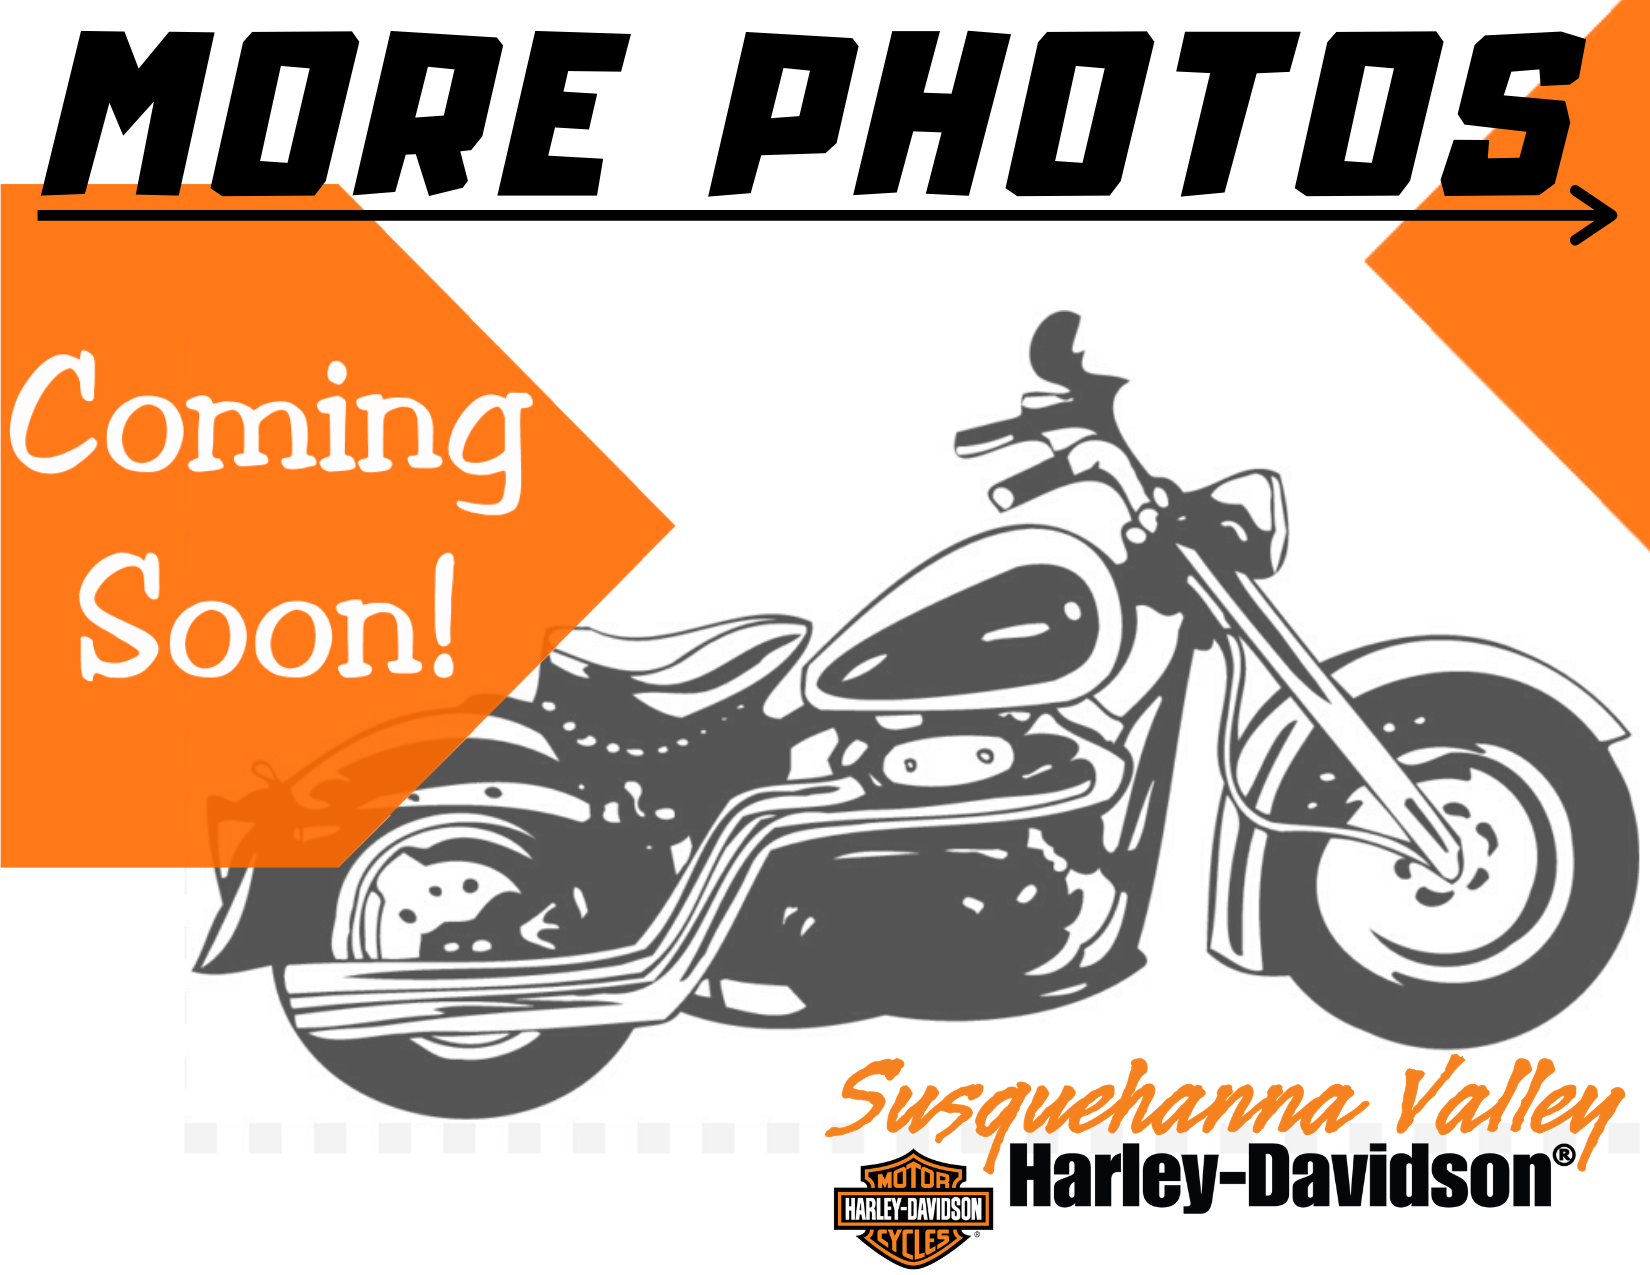 2020 Harley-Davidson Heritage Classic in Harrisburg, Pennsylvania - Photo 6